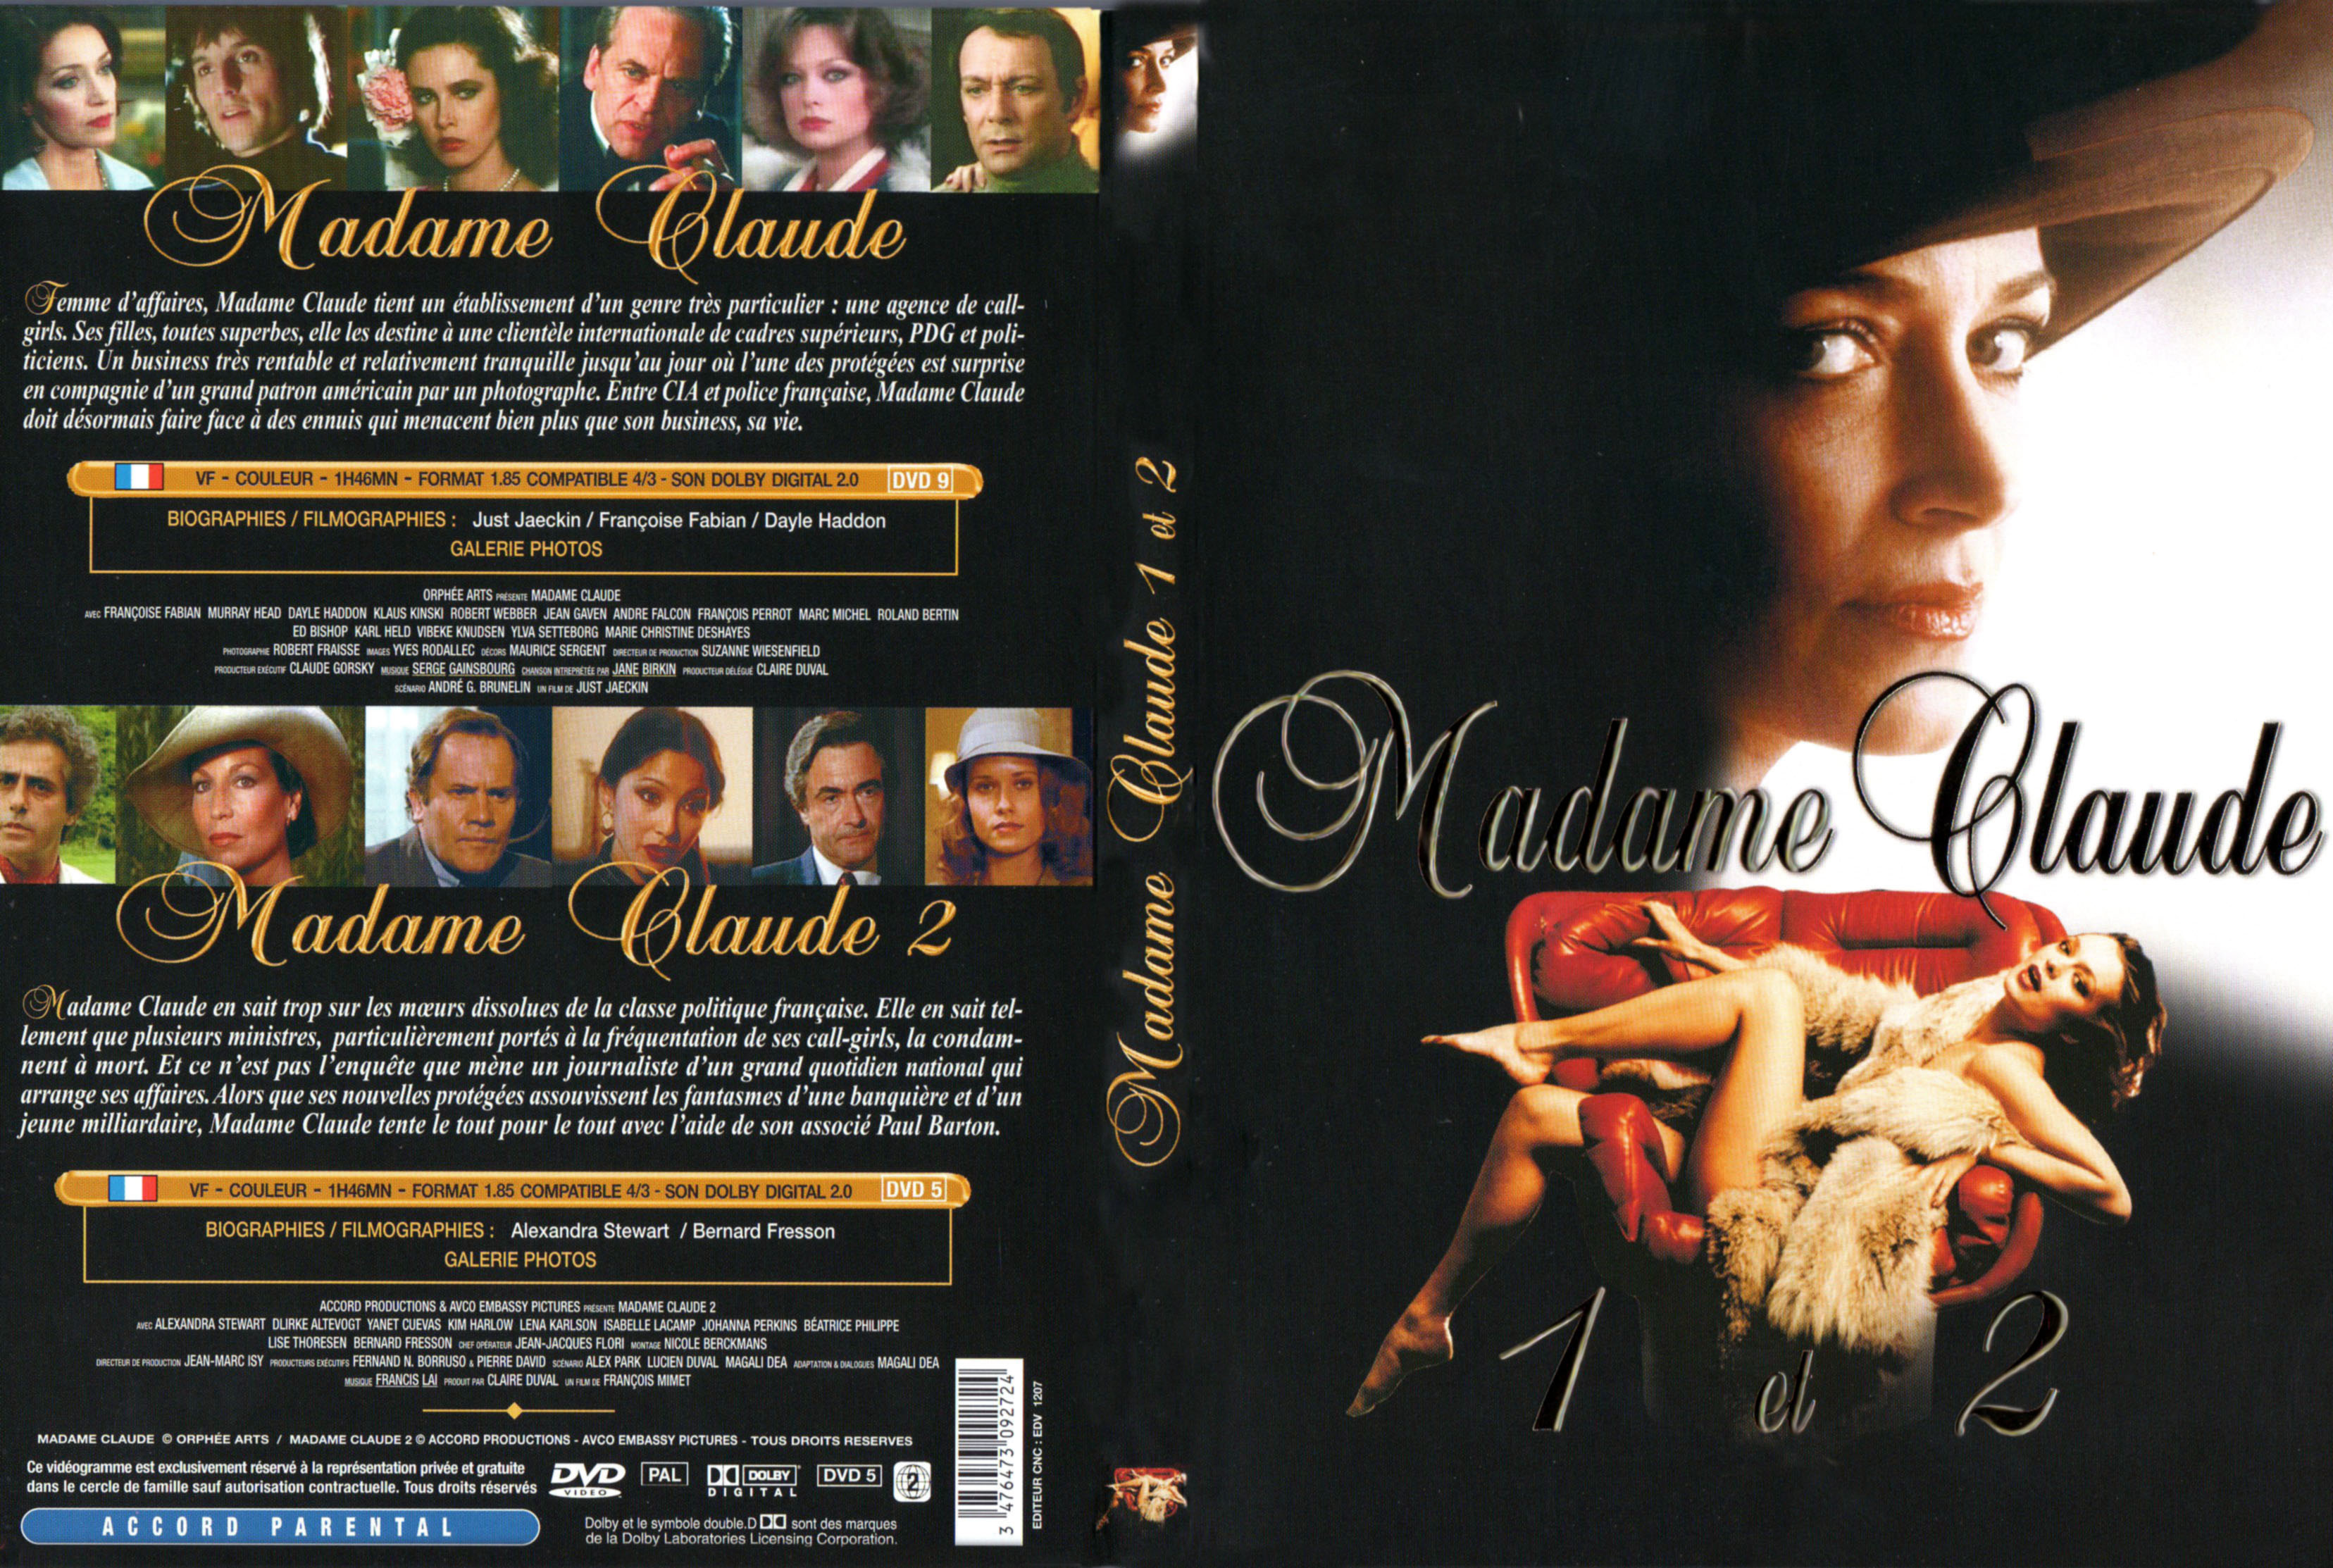 Jaquette DVD Madame Claude 1 et 2